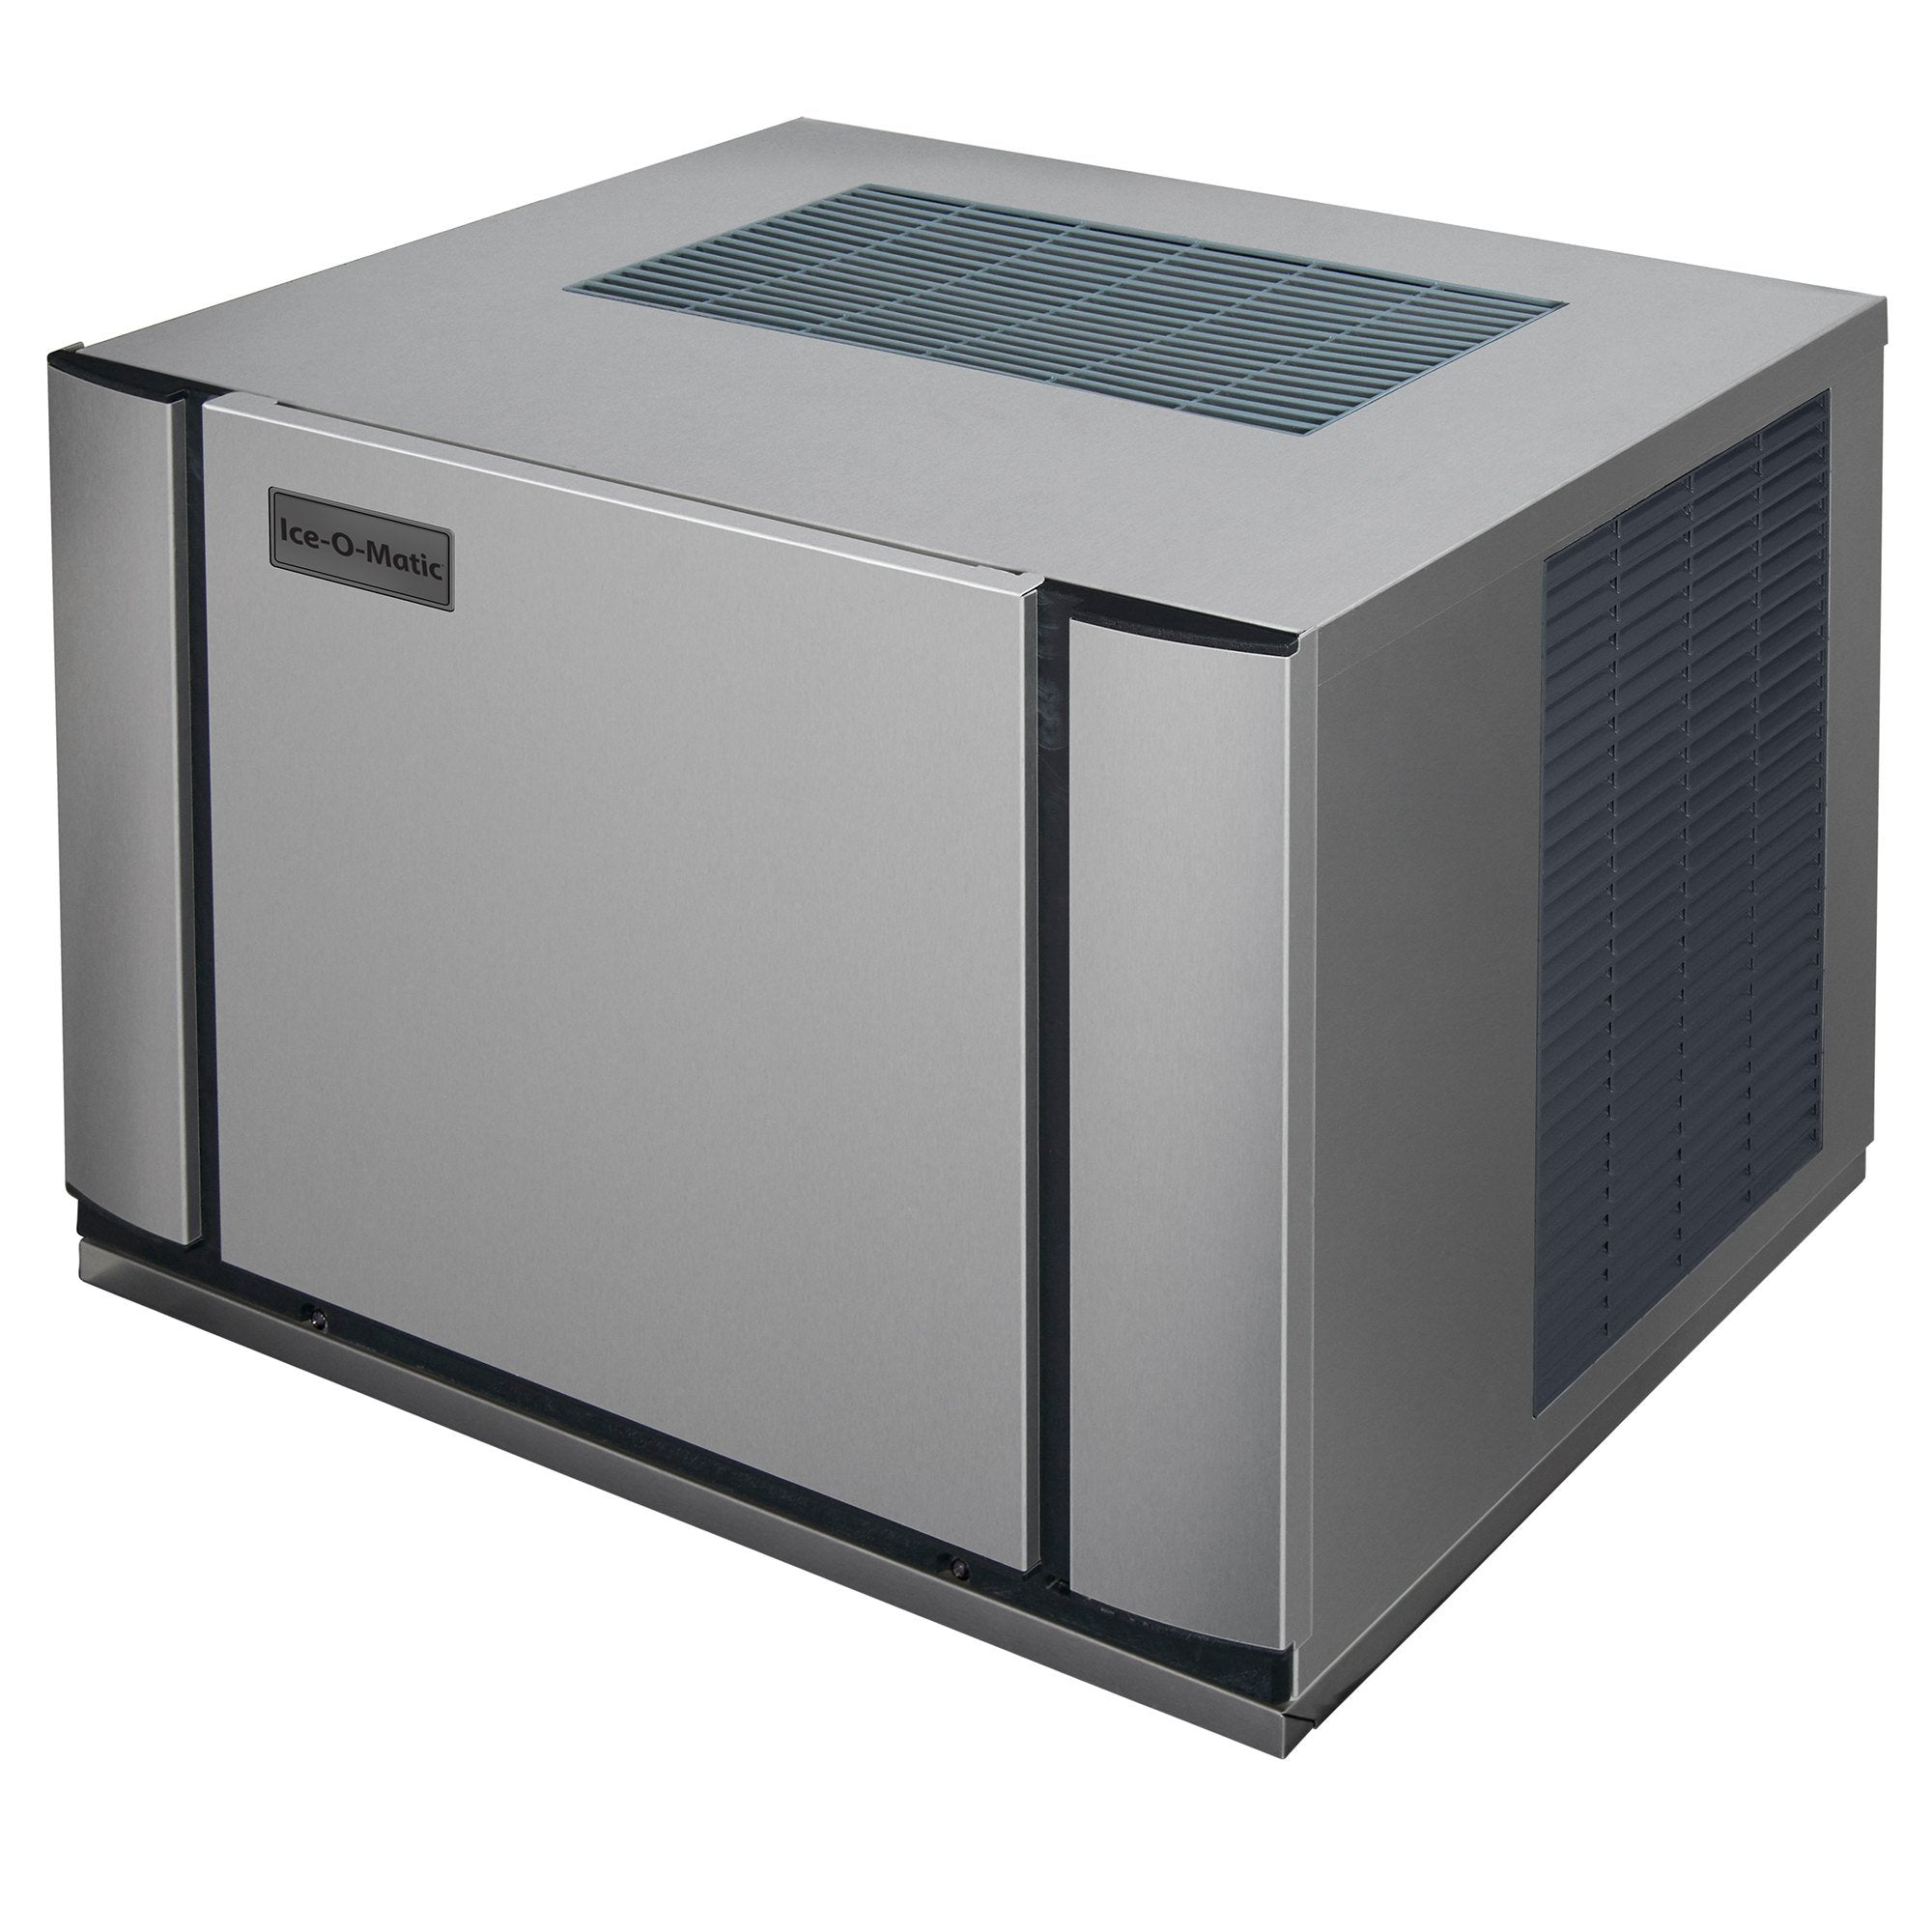 Ice-O-Matic CIM0836FA Air Cooled Full Cube/Dice 30" Elevation Series Ice Machine, 896 lb. Capacity